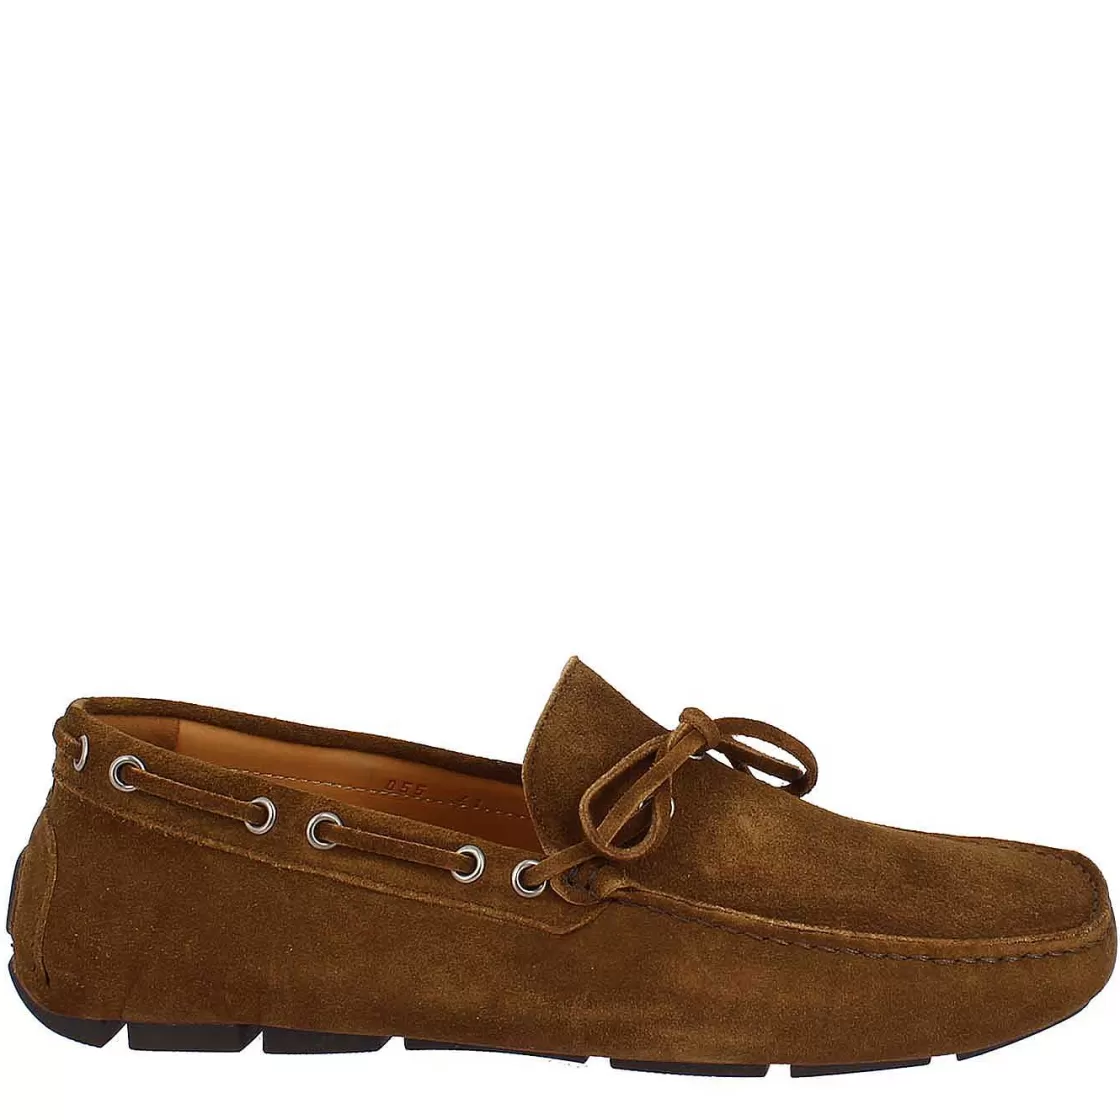 Leonardo Handmade Men'S Carshoe Loafers In Brown Suede. Fashion